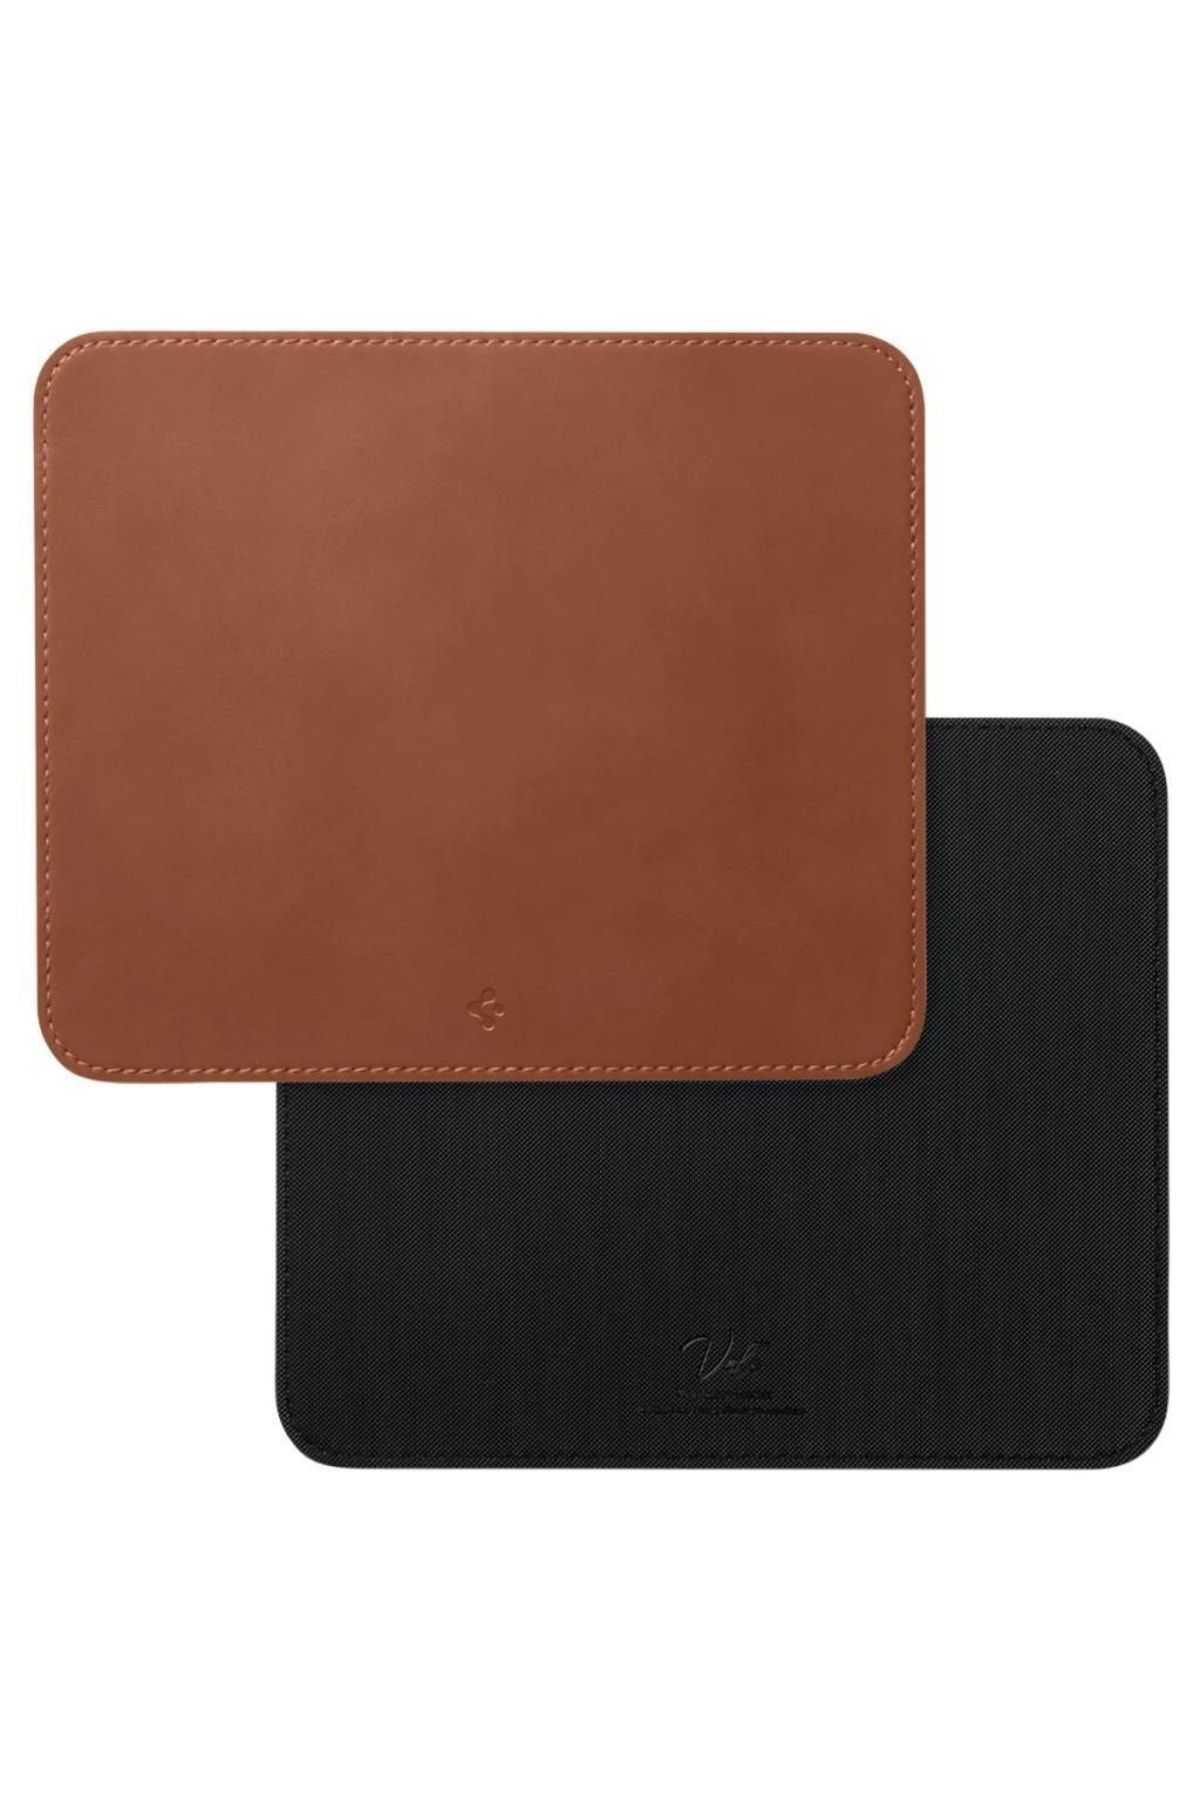 Spigen Regnum LD301 Orta Boy 25 x 21 cm Mouse Pad (Velo Vegan Leather Technology) Black - APP04760